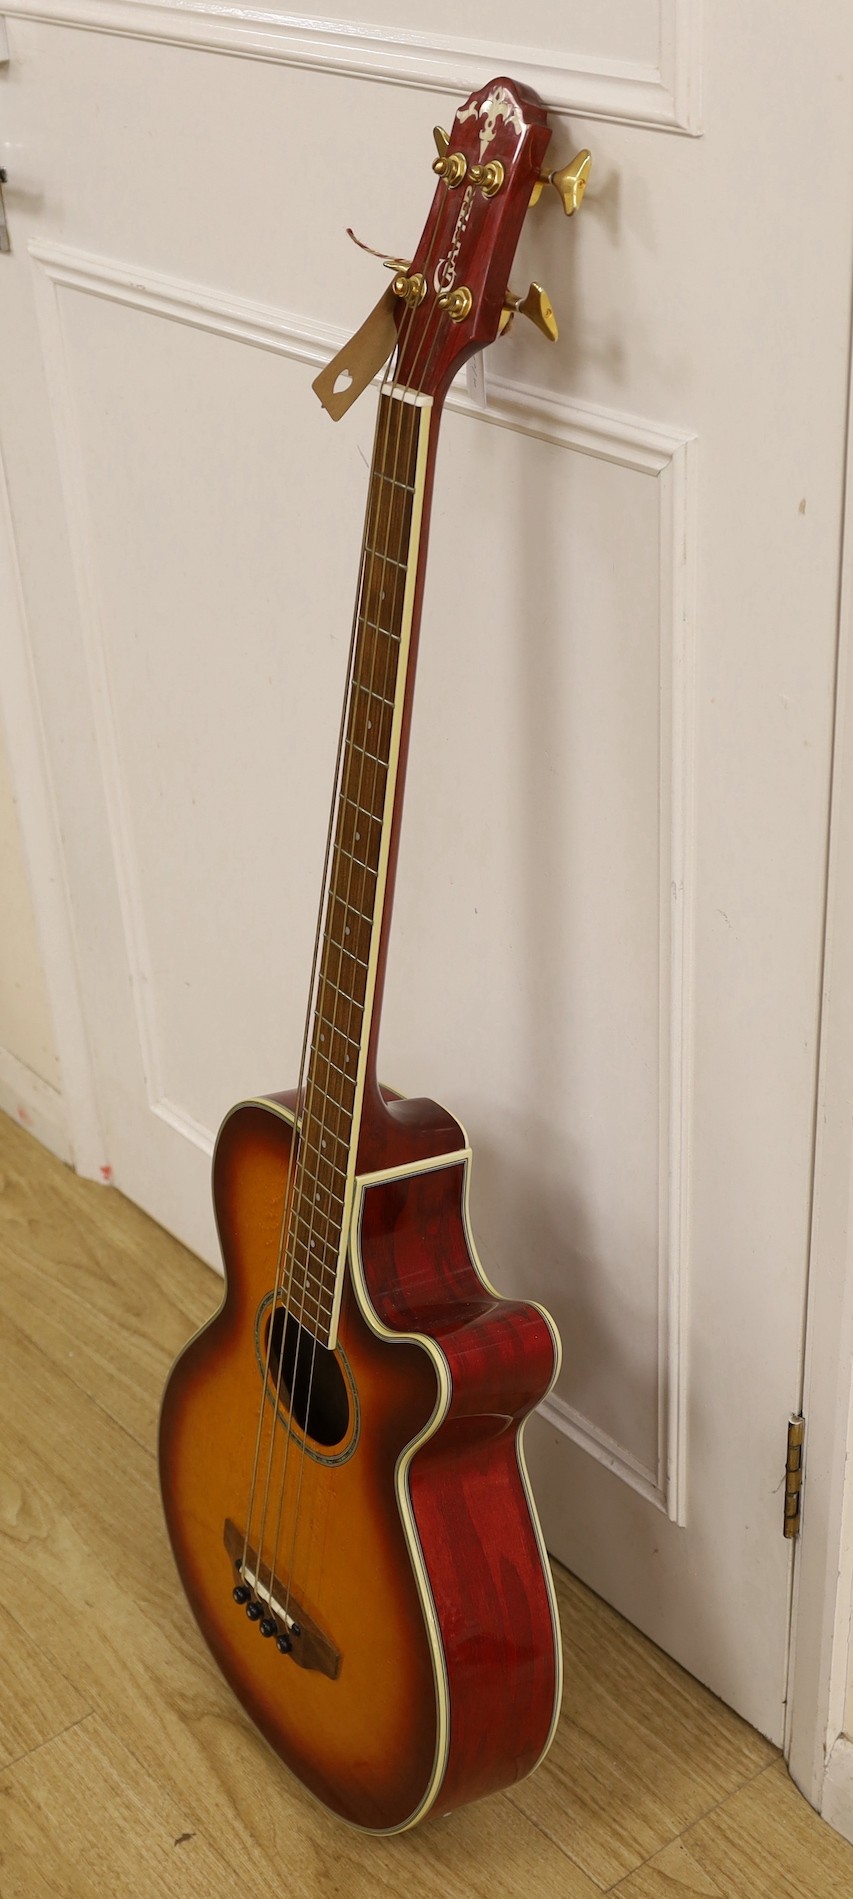 A Crafter electro-acoustic bass guitar. Model No. BA-600EQ/AMS-P Serial No. 00202718, 113cms high.